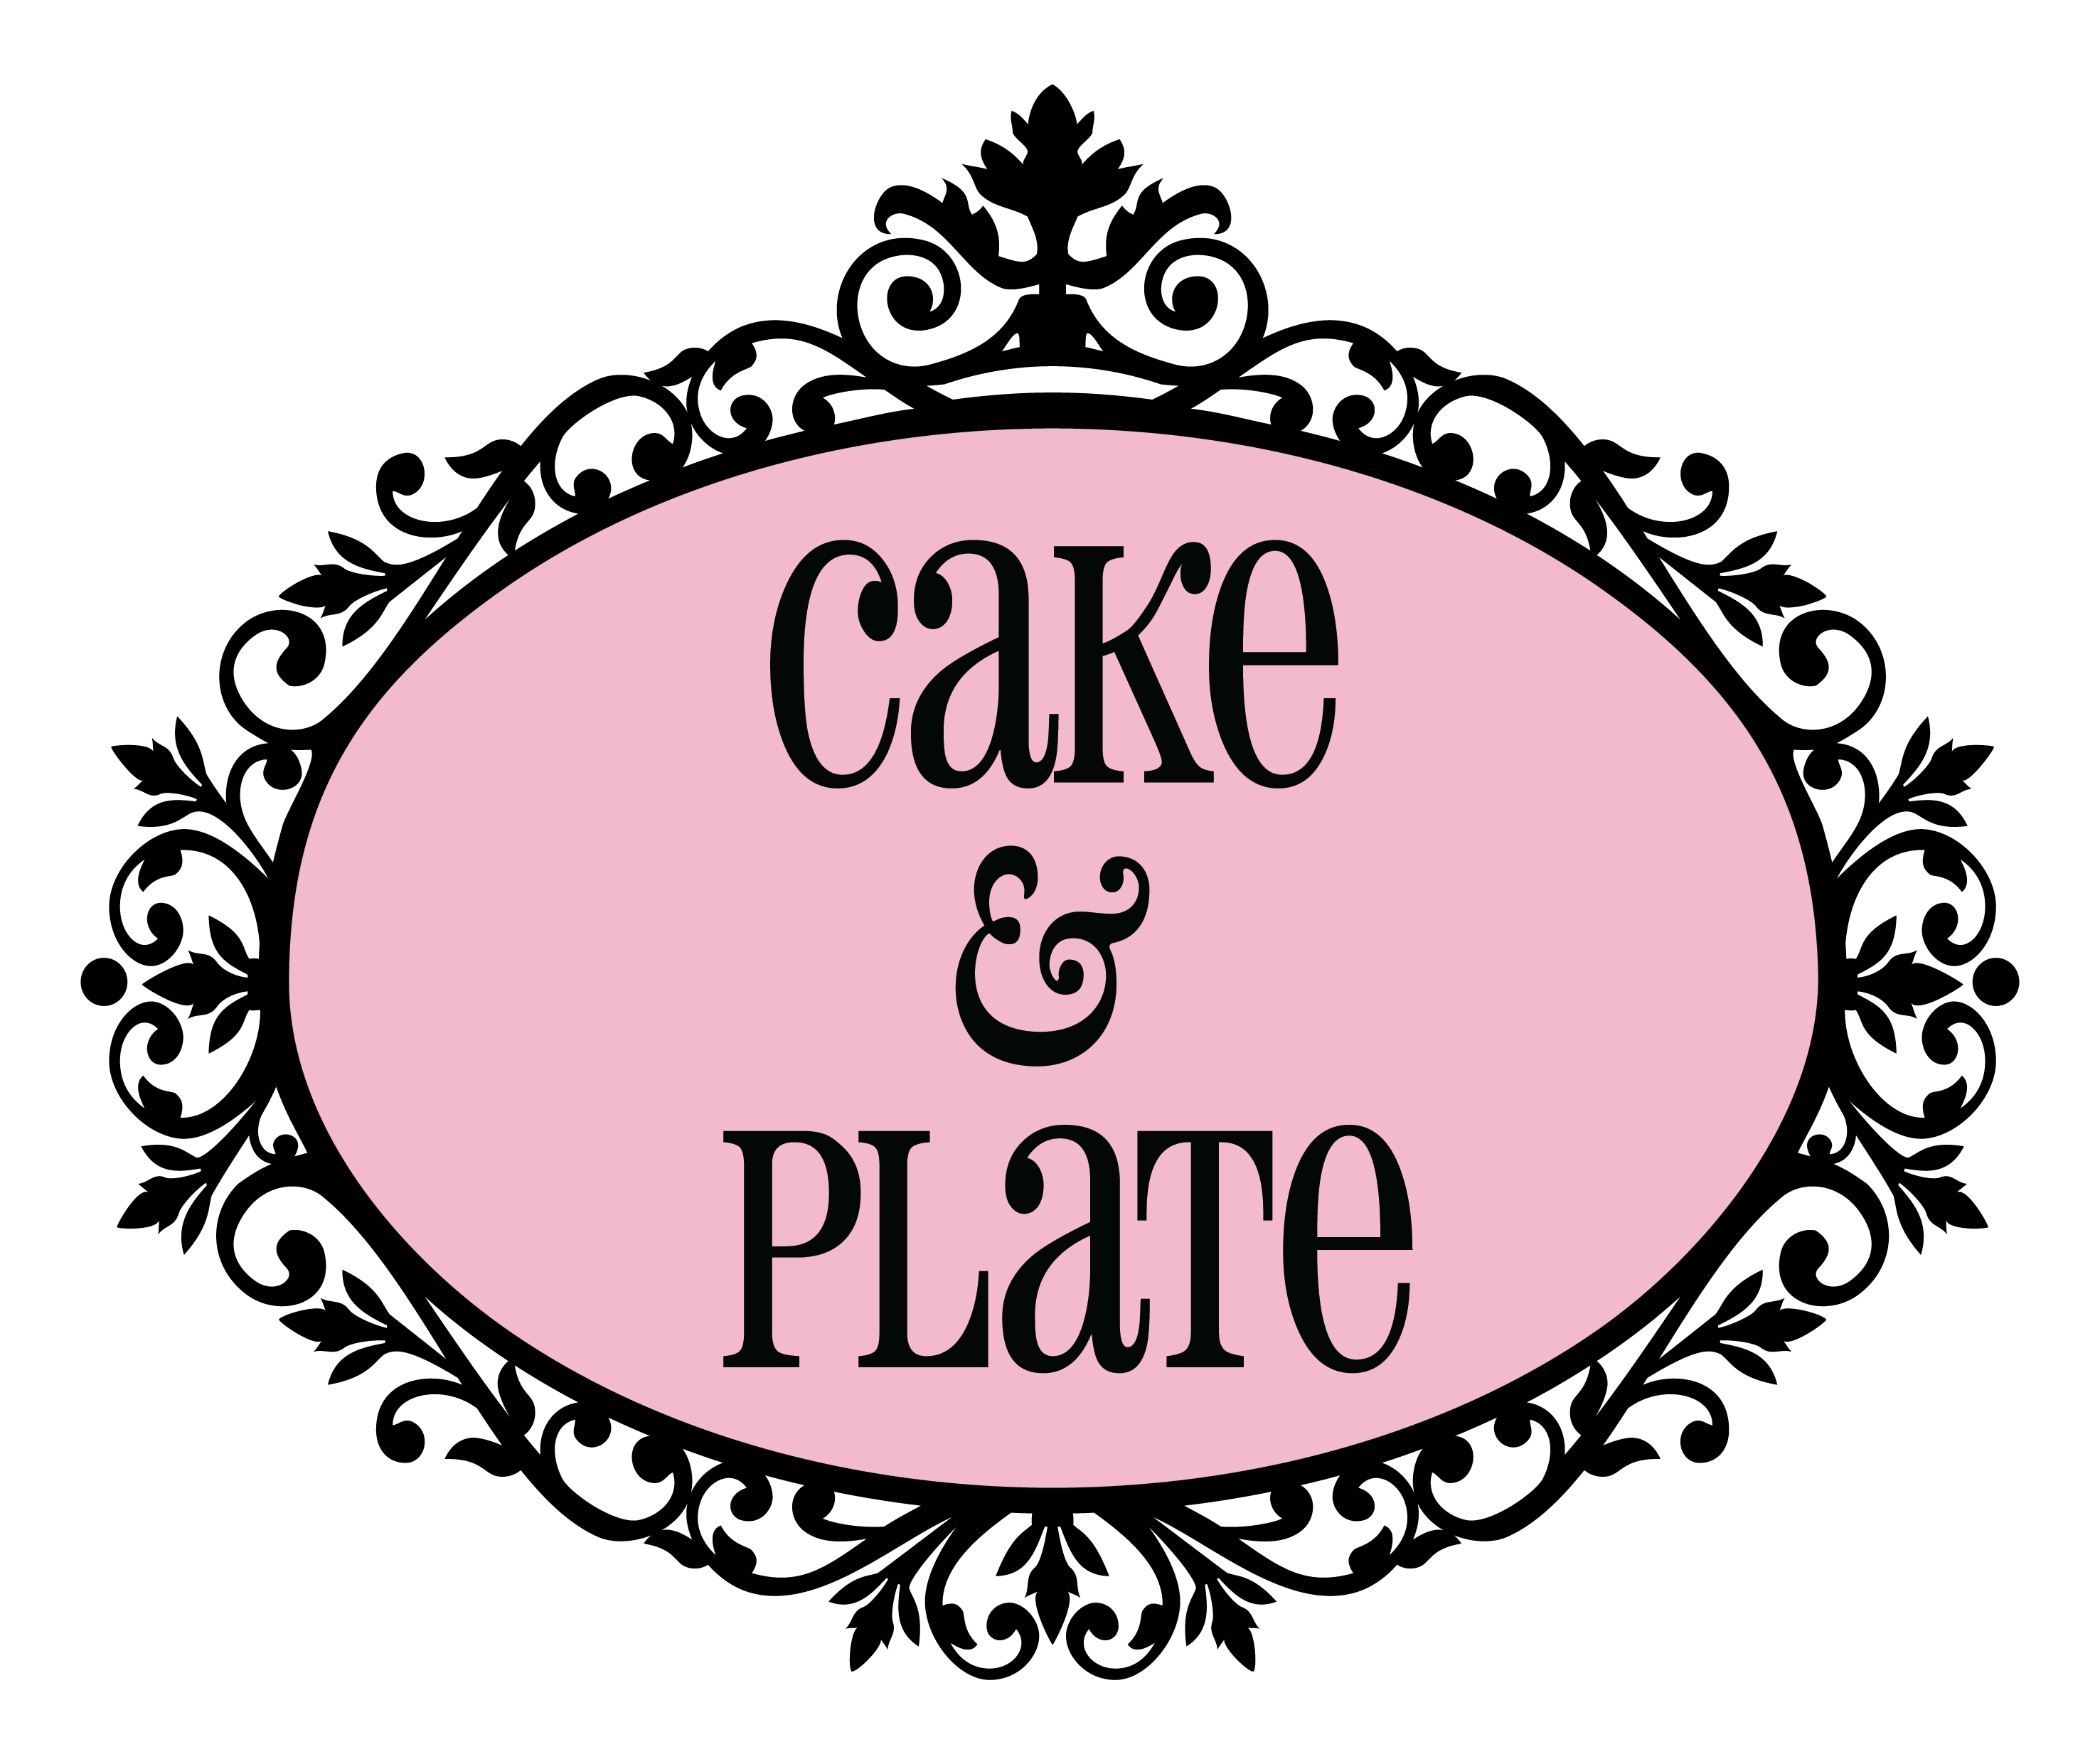 Cake & Plate